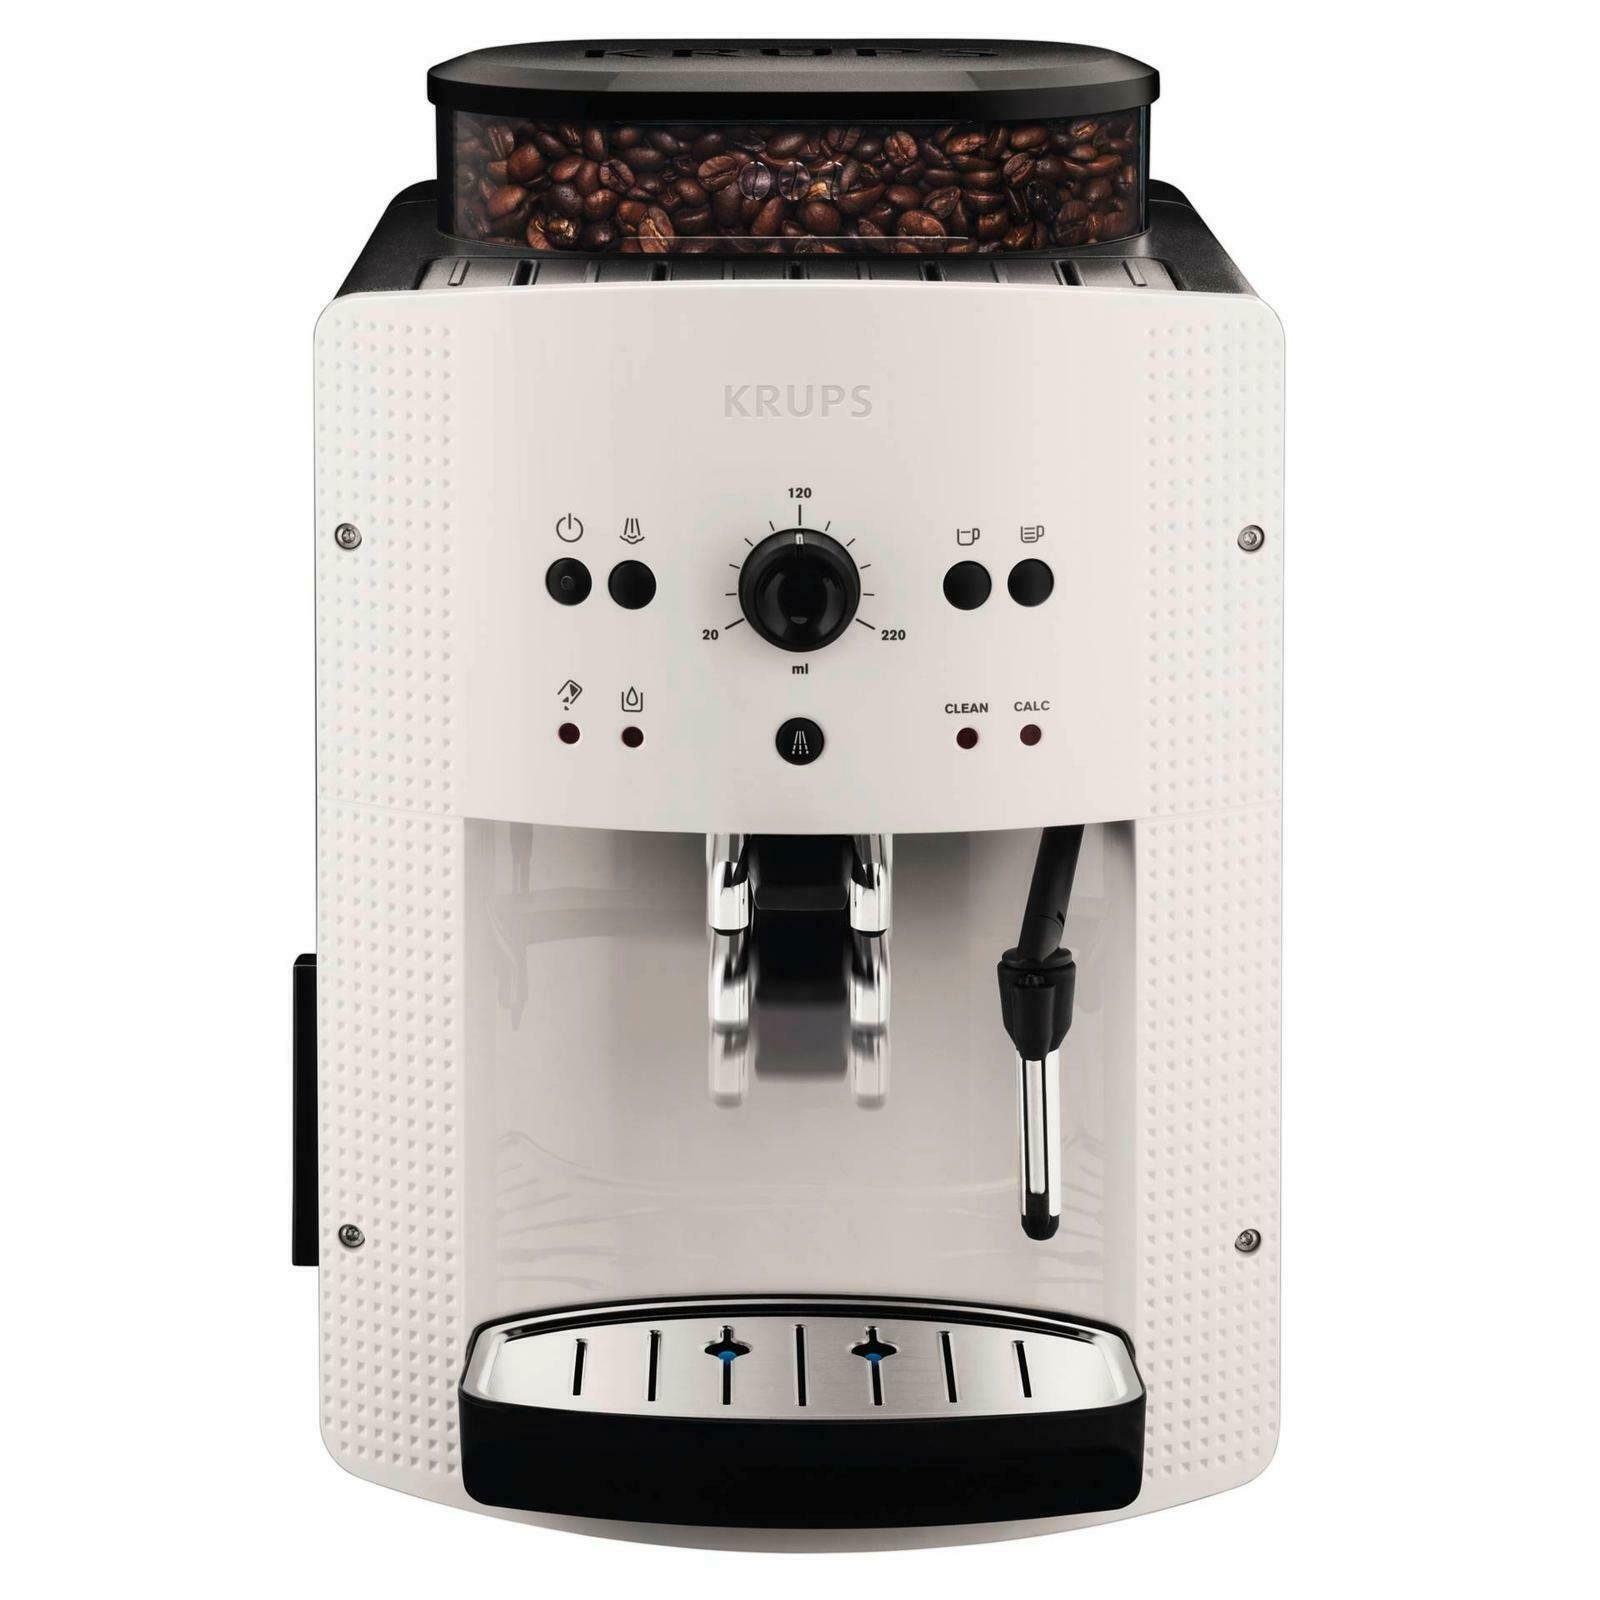 Krups Kaffeevollautomat EA 8105 - Kaffee-Vollautomat - weiß/schwarz